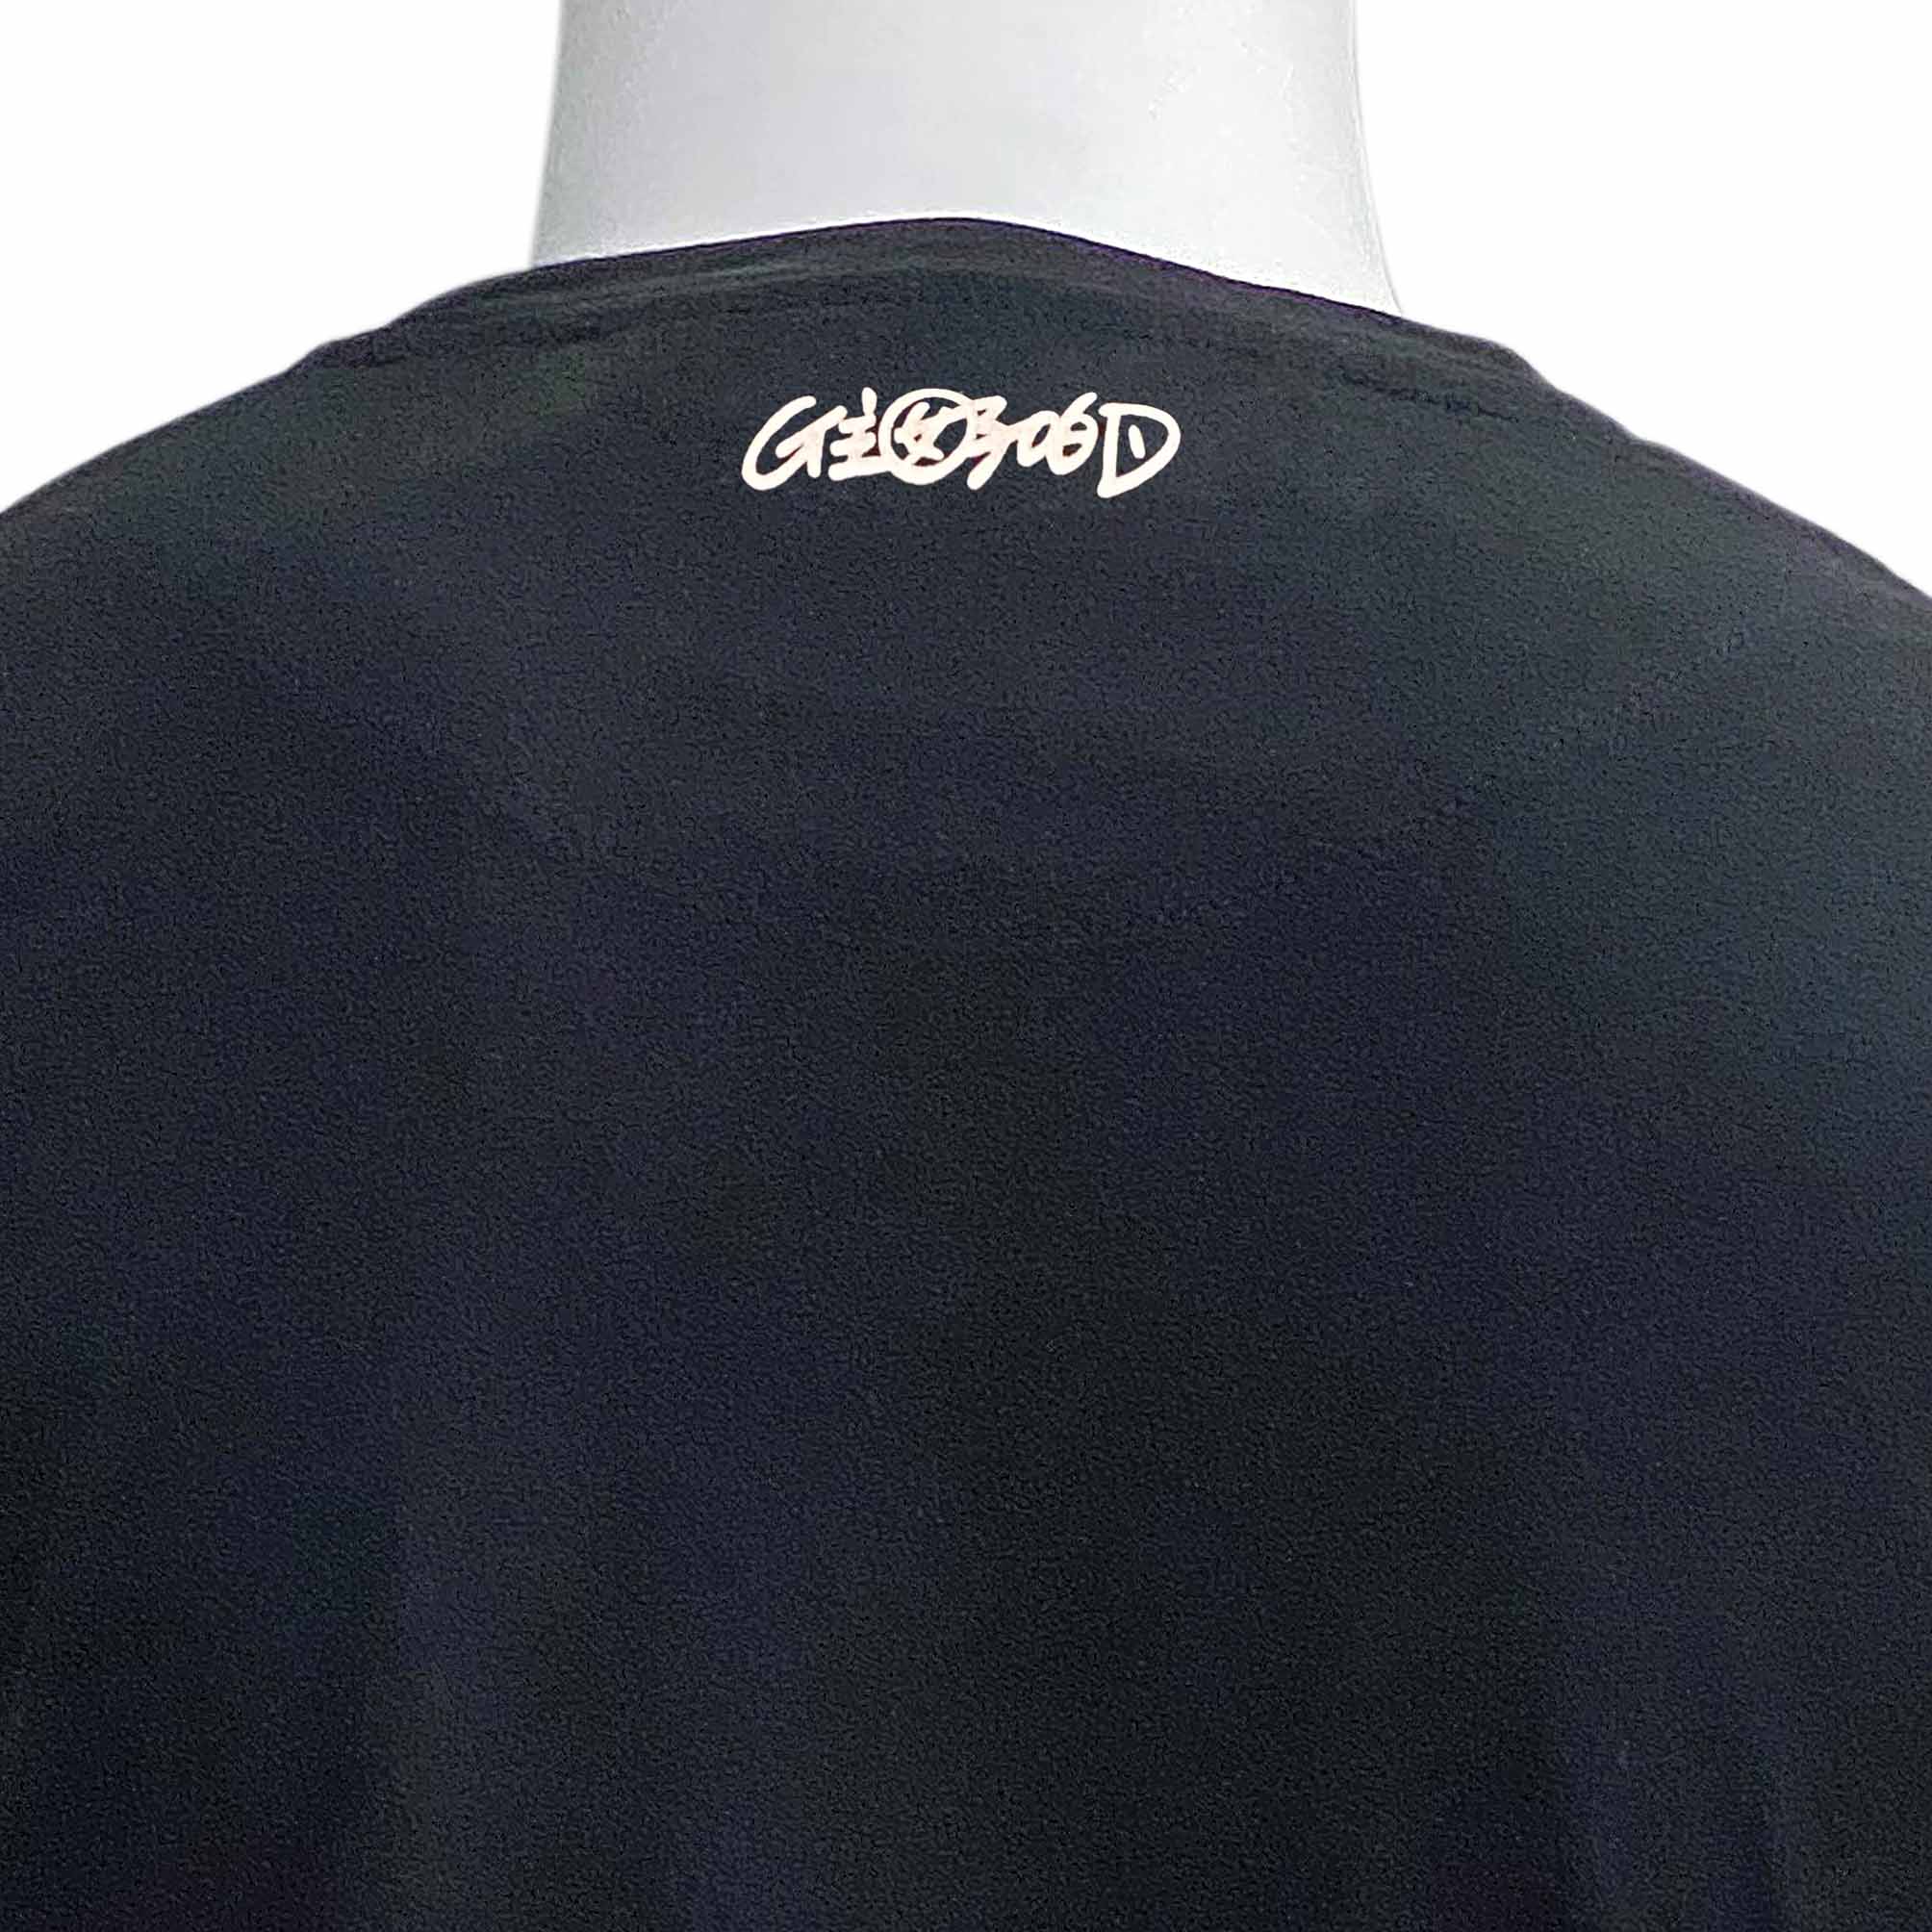 Made in Hong Kong T-Shirt, Black